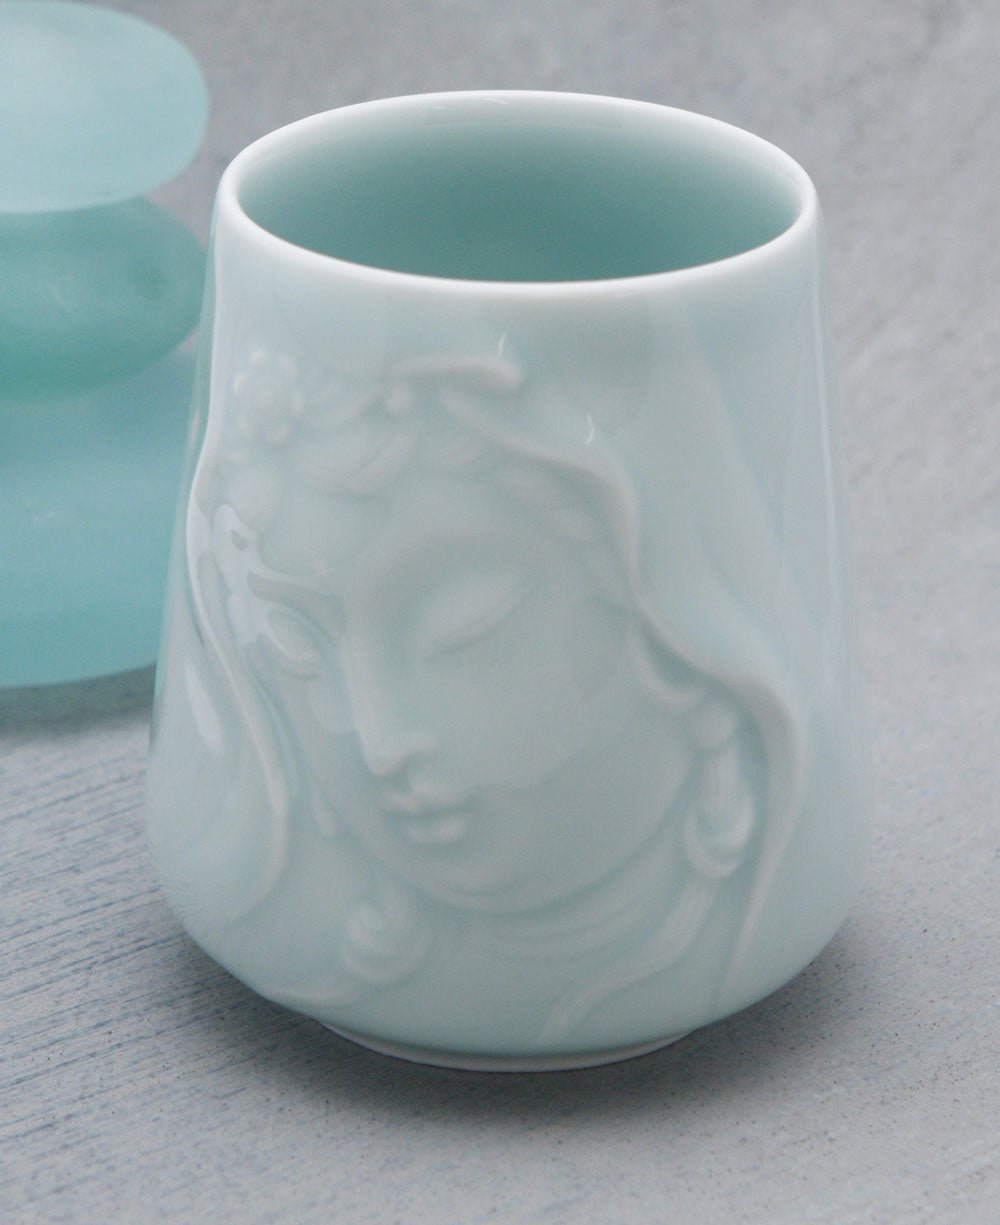 Kuan Yin Serenity Vase, 4.25 Inches - Vases